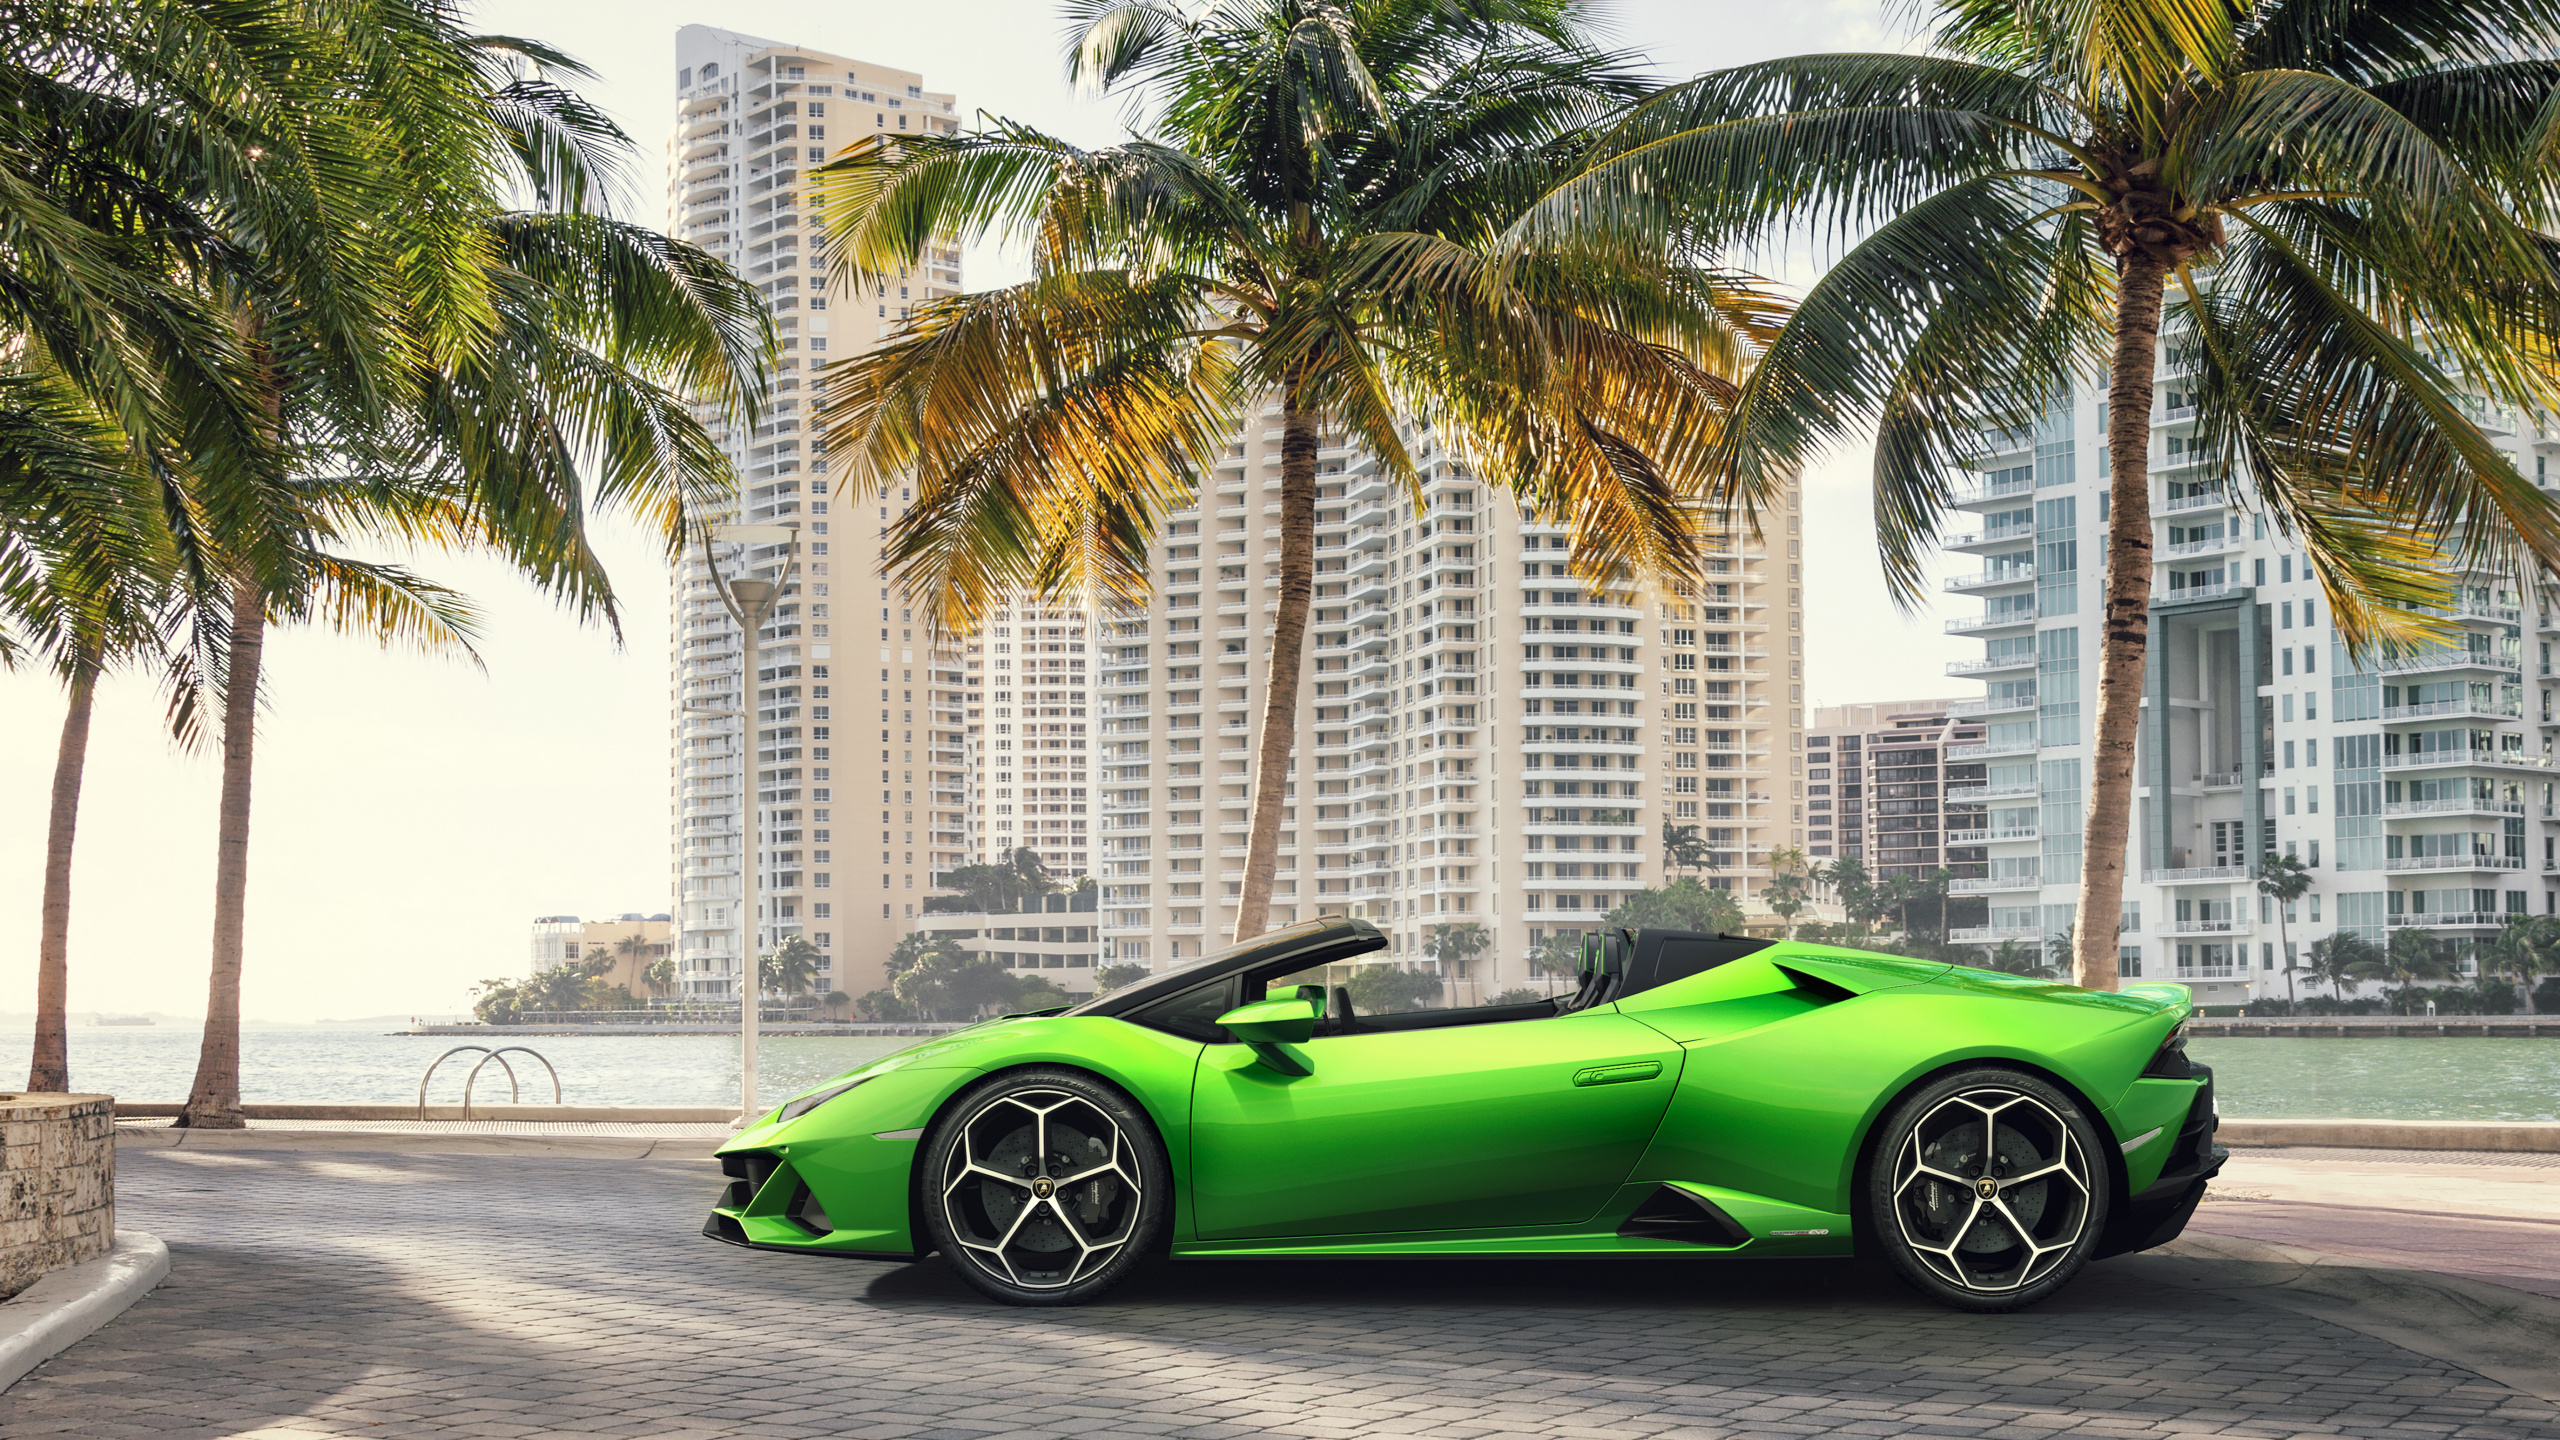 Green Ferrari Sports Car on Road During Daytime. Wallpaper in 2560x1440 Resolution